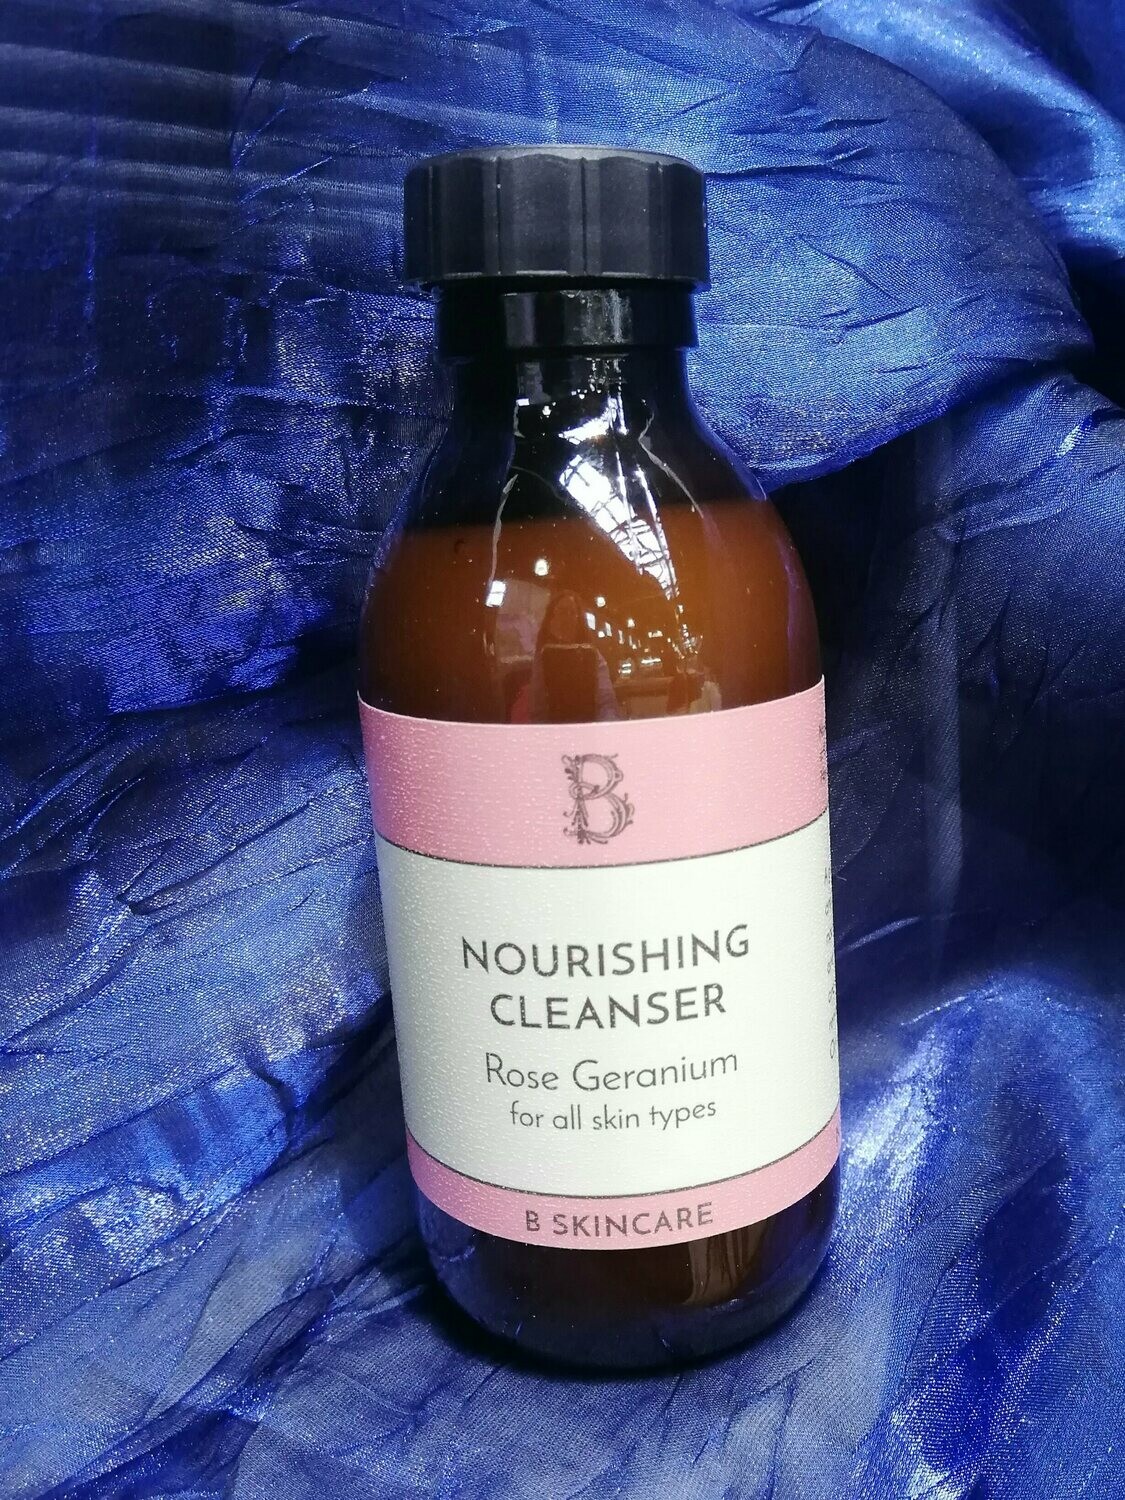 B Skincare Nourishing cleanser